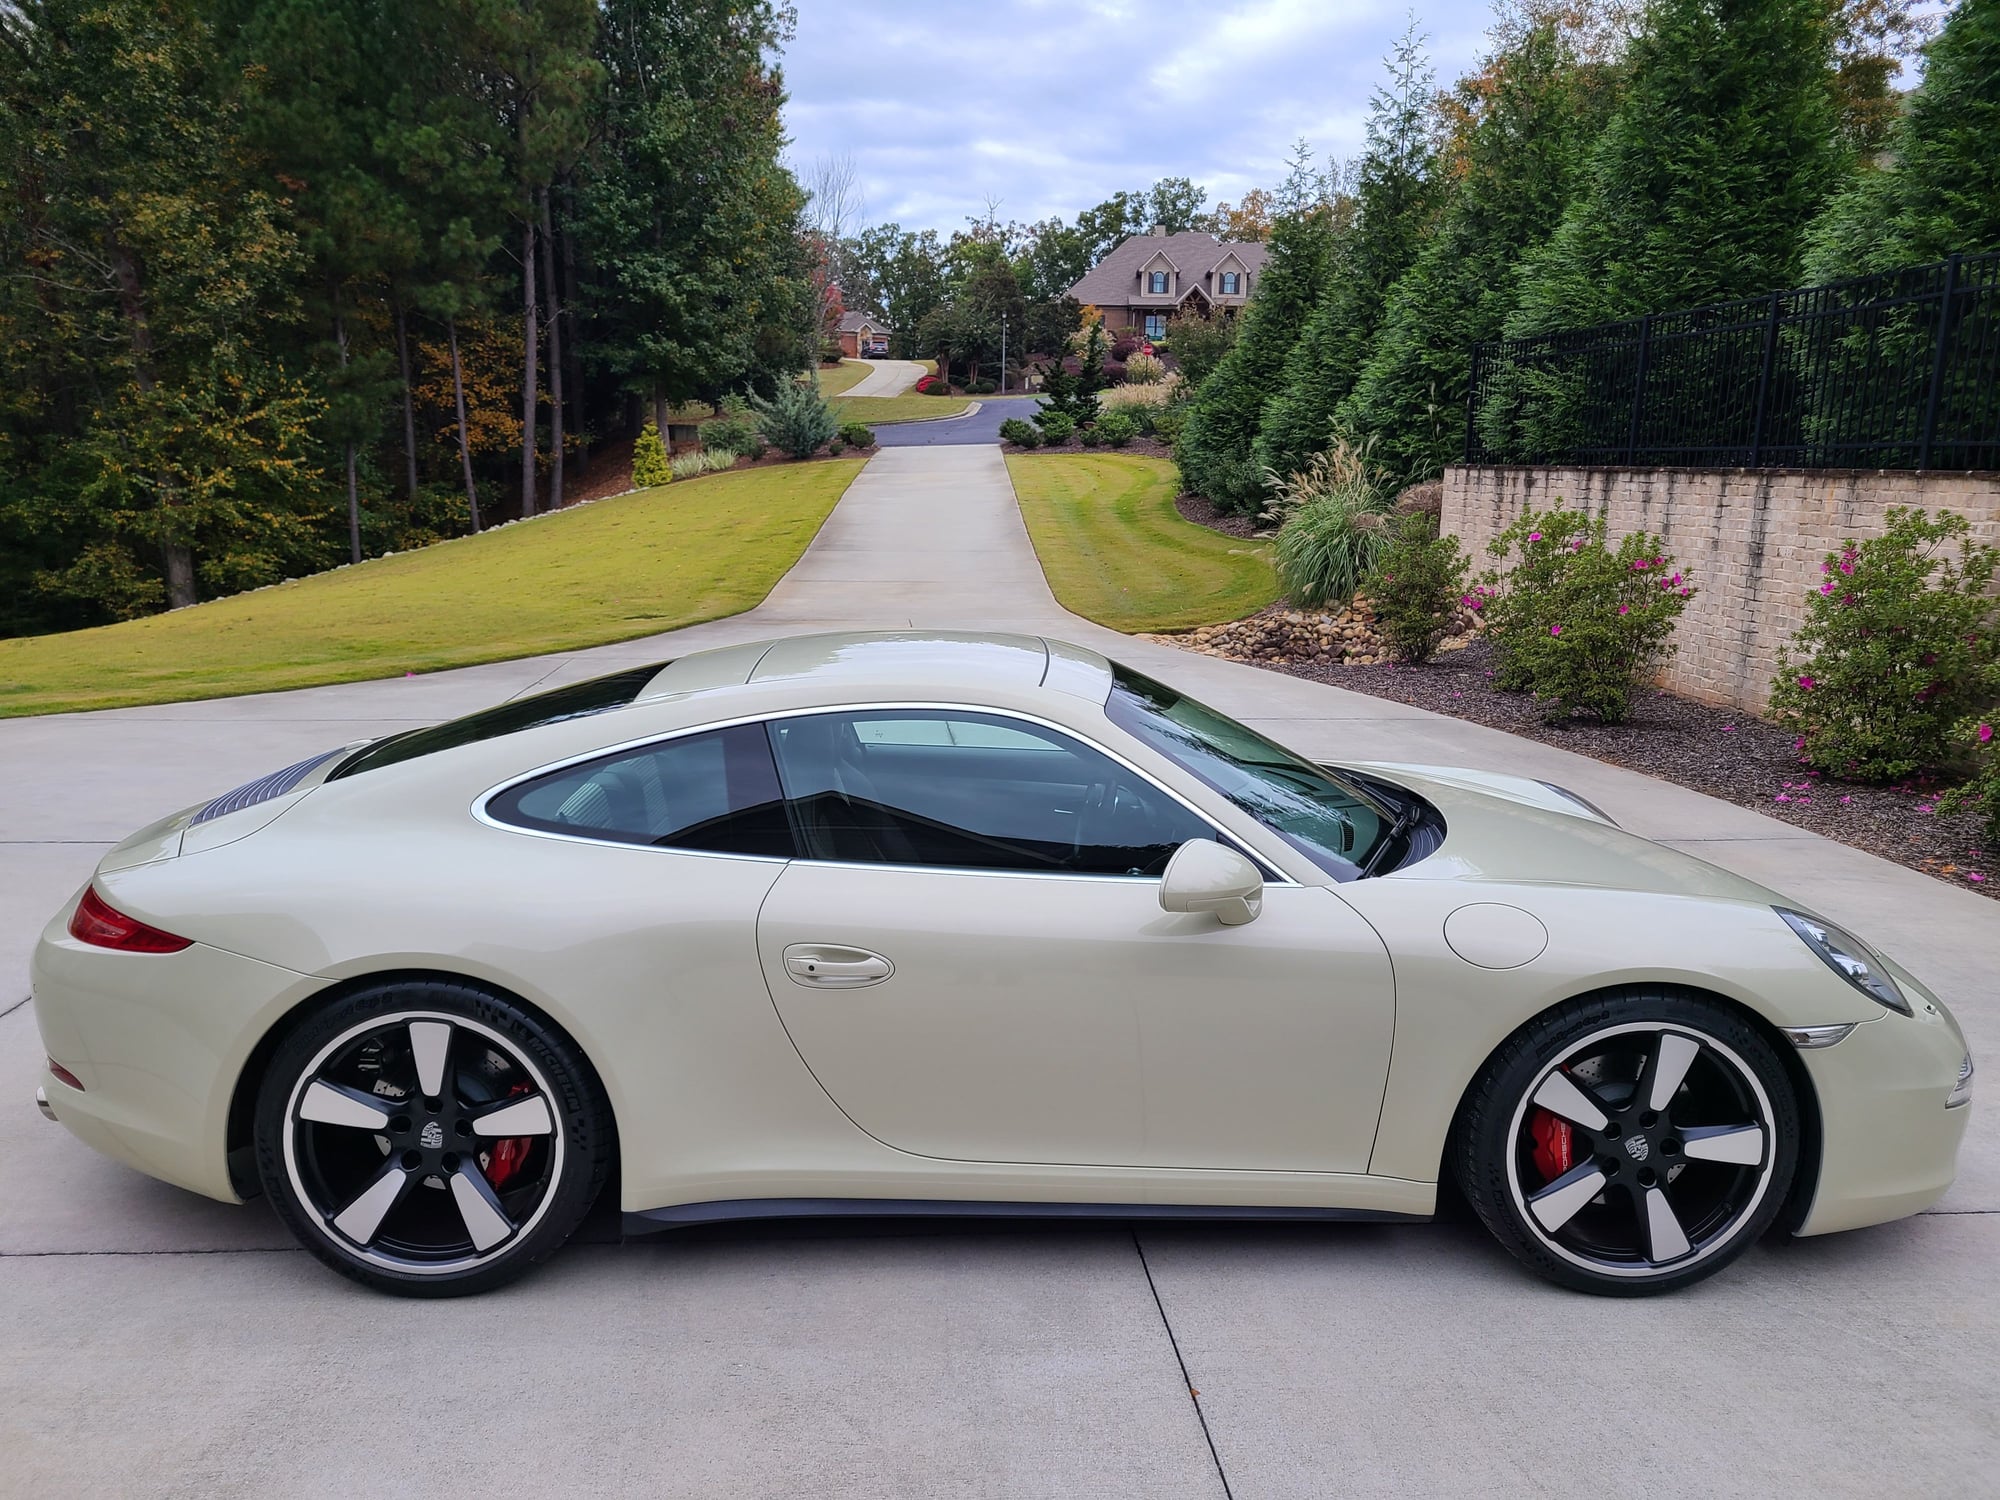 2014 Porsche 911 - 2014 Porsche 50th Anniversary Edition. Pristine Condition CPO Certified - Used - VIN wp0ab2a98es121572 - 36,325 Miles - 6 cyl - 2WD - Automatic - Coupe - Gray - Oakwood, GA 30566, United States